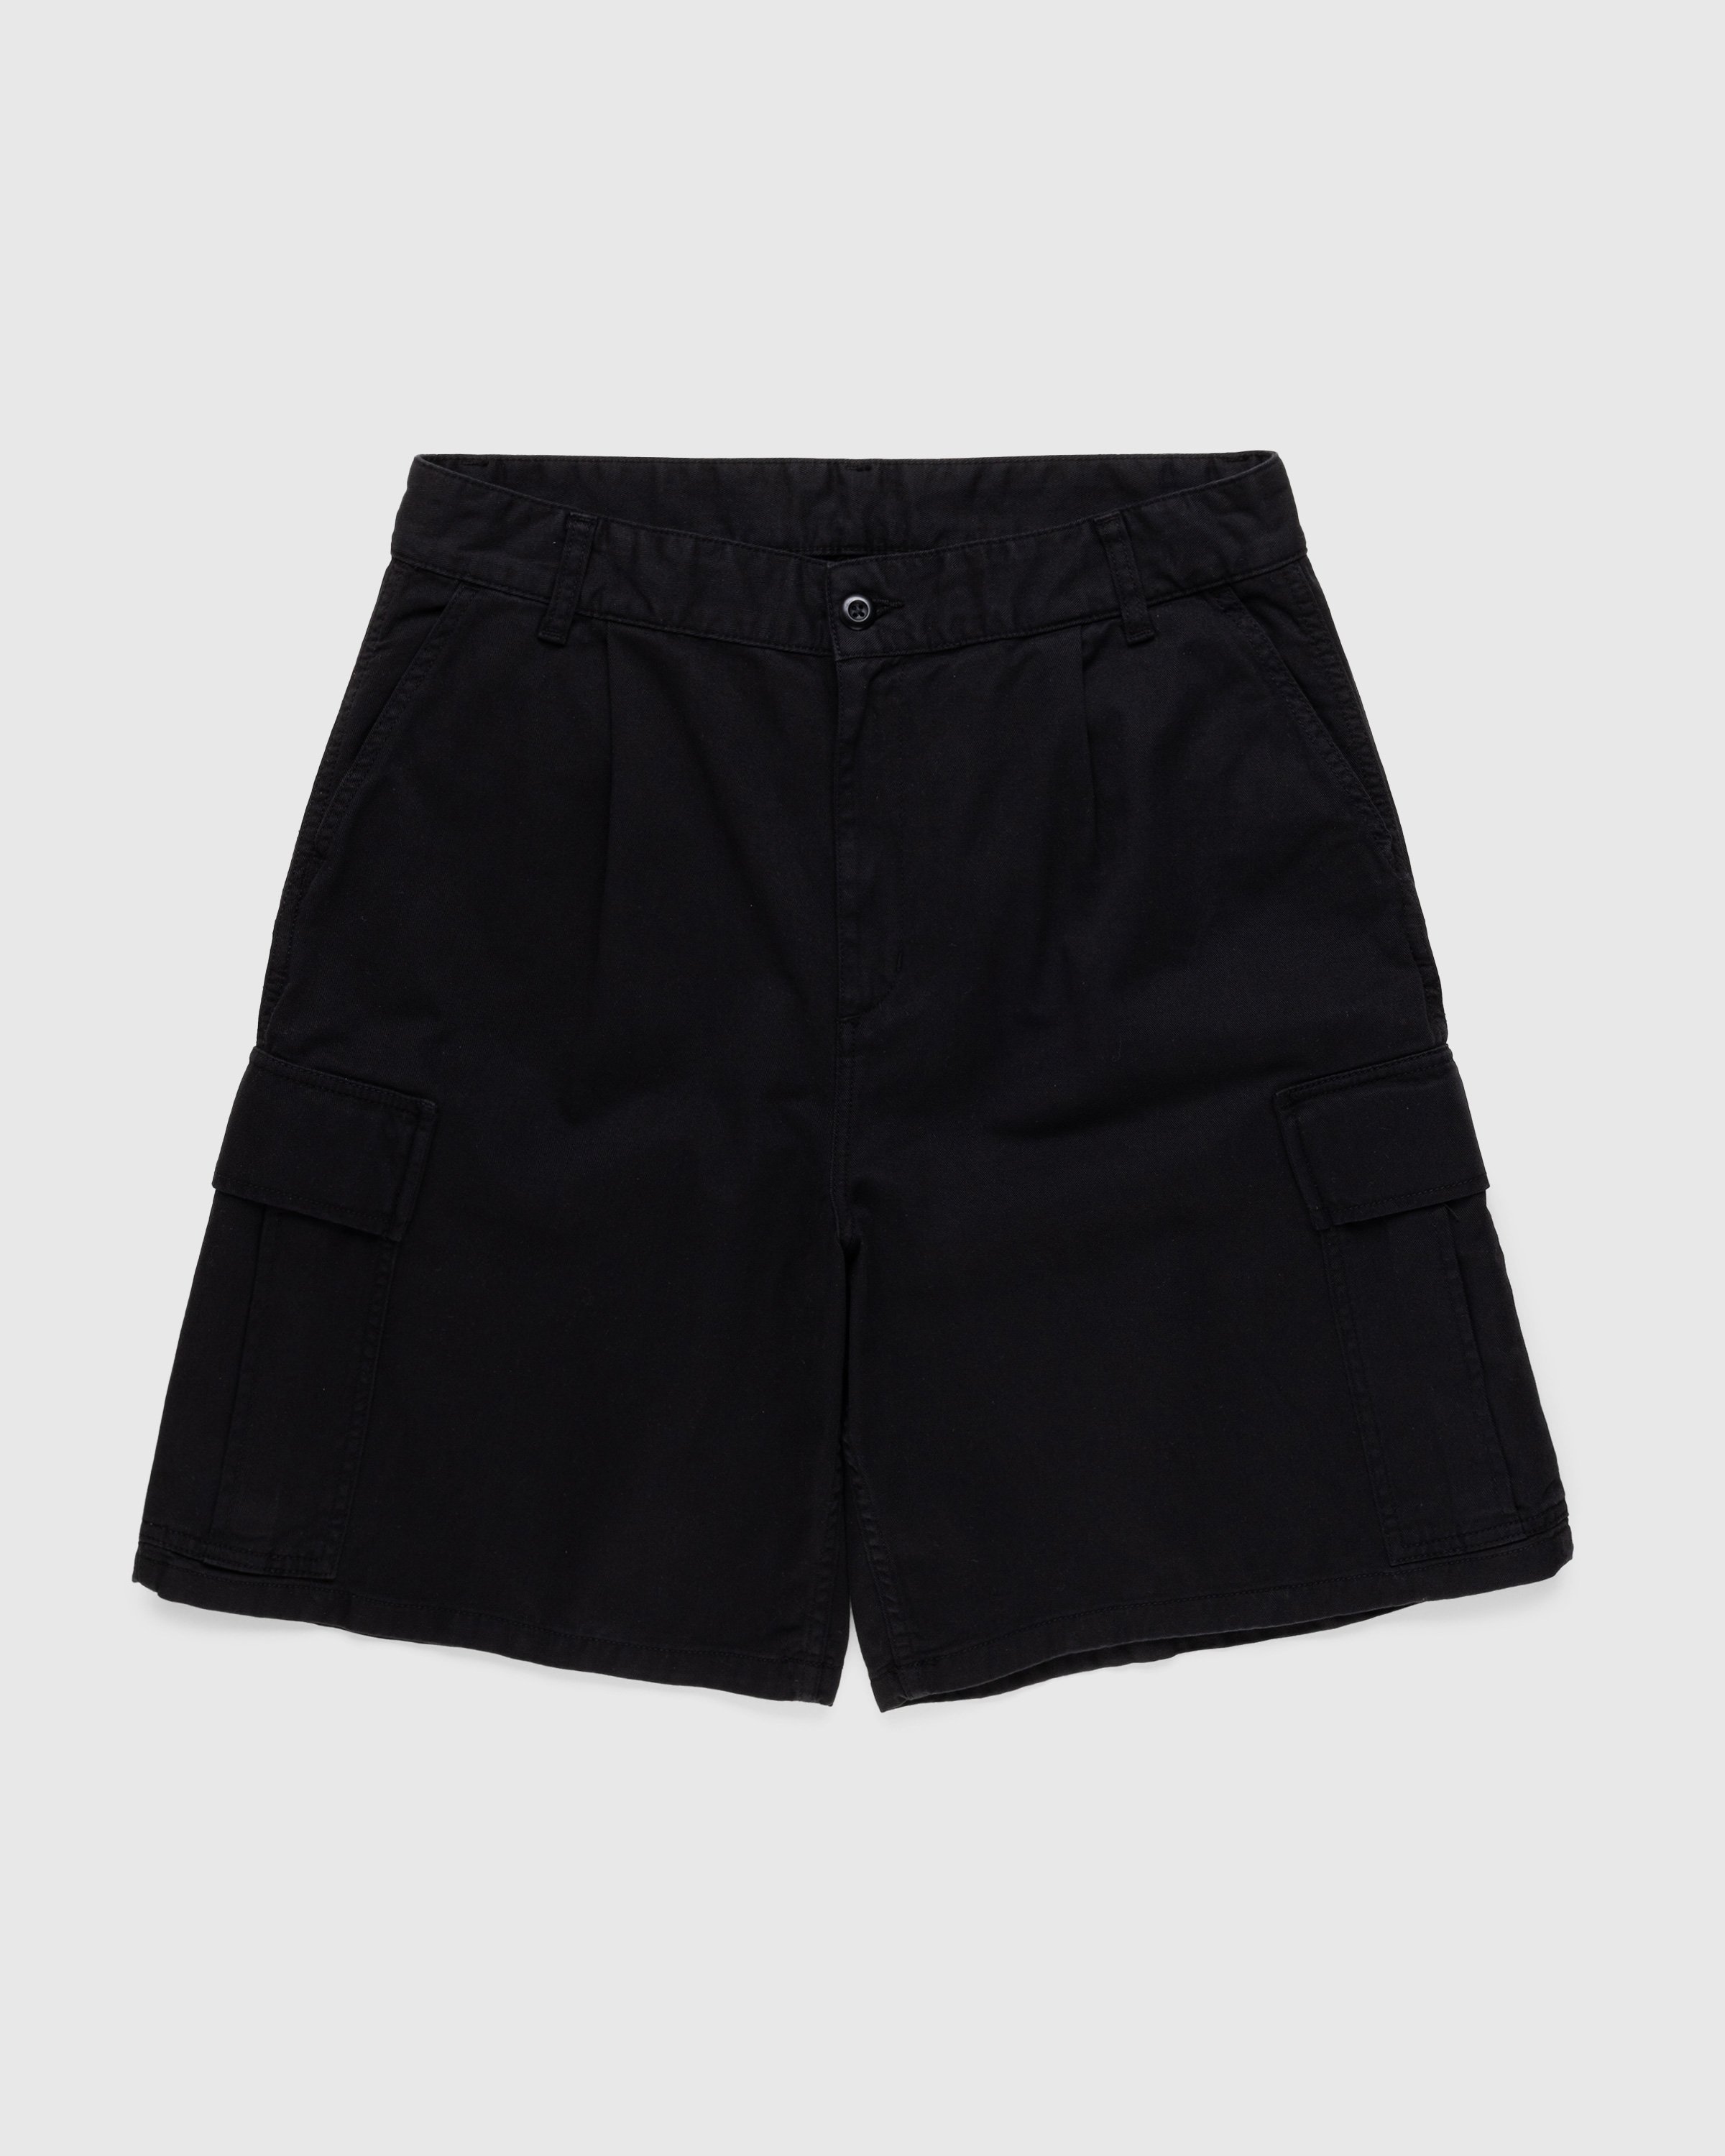 Carhartt WIP - Cole Cargo Short Black - Clothing - Black - Image 1